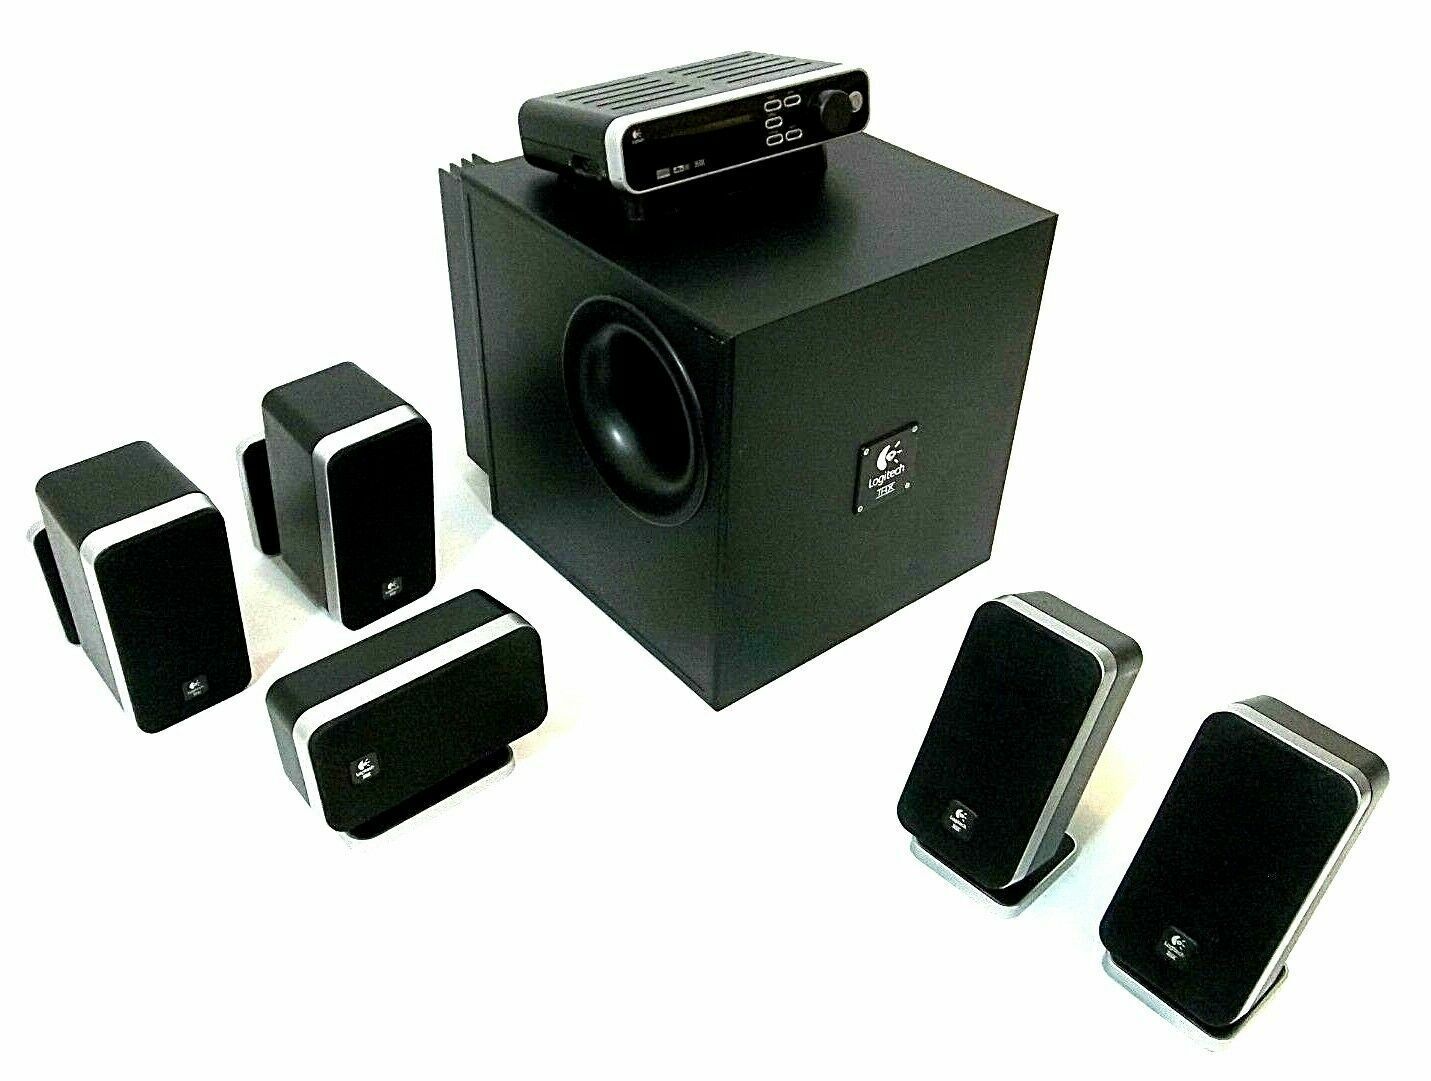 Logitech Z-5450 Digital 5.1 Surround System with Wireless Rear Speakers eBay